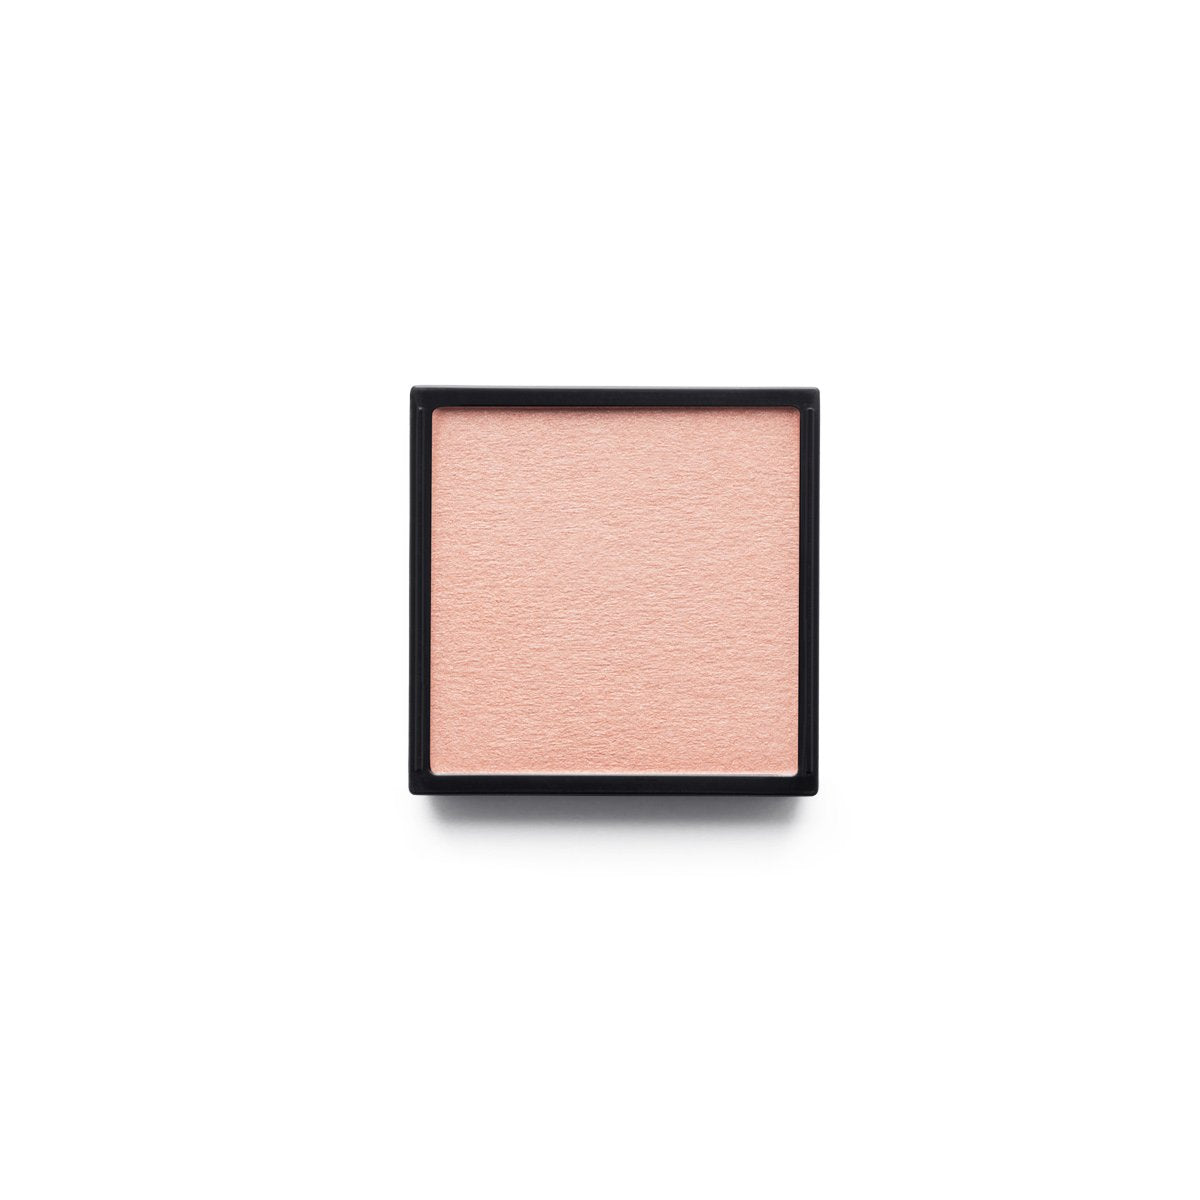 CORSAGE - MATTE MAUVE ROSE - matte finish eyeshadow in mauve rose shade 